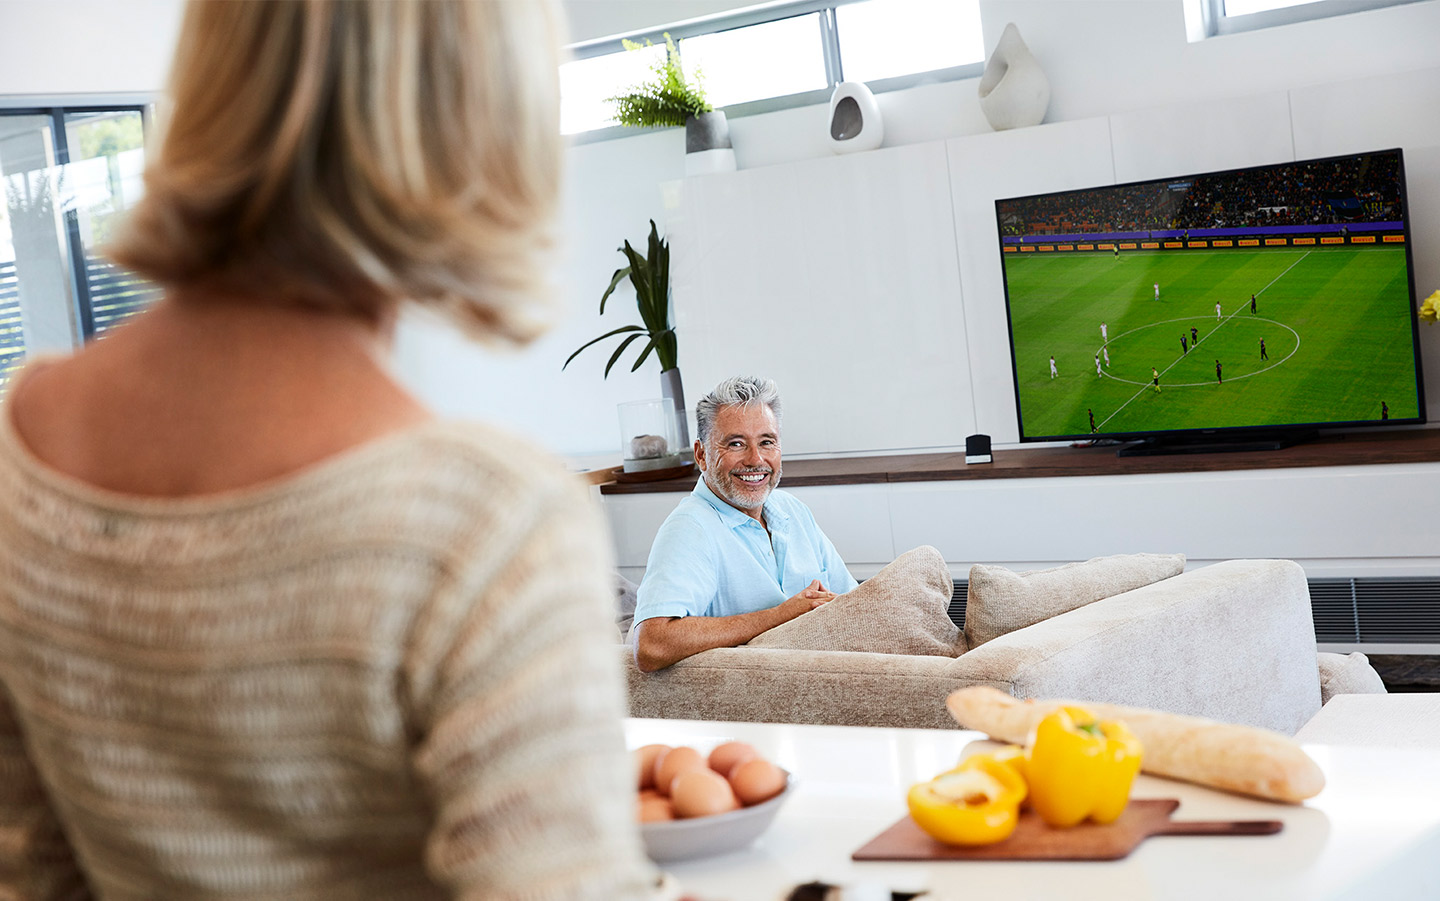 Homem adulto assistindo ao futebol na TV com o Cochlear Wireless TV Streamer